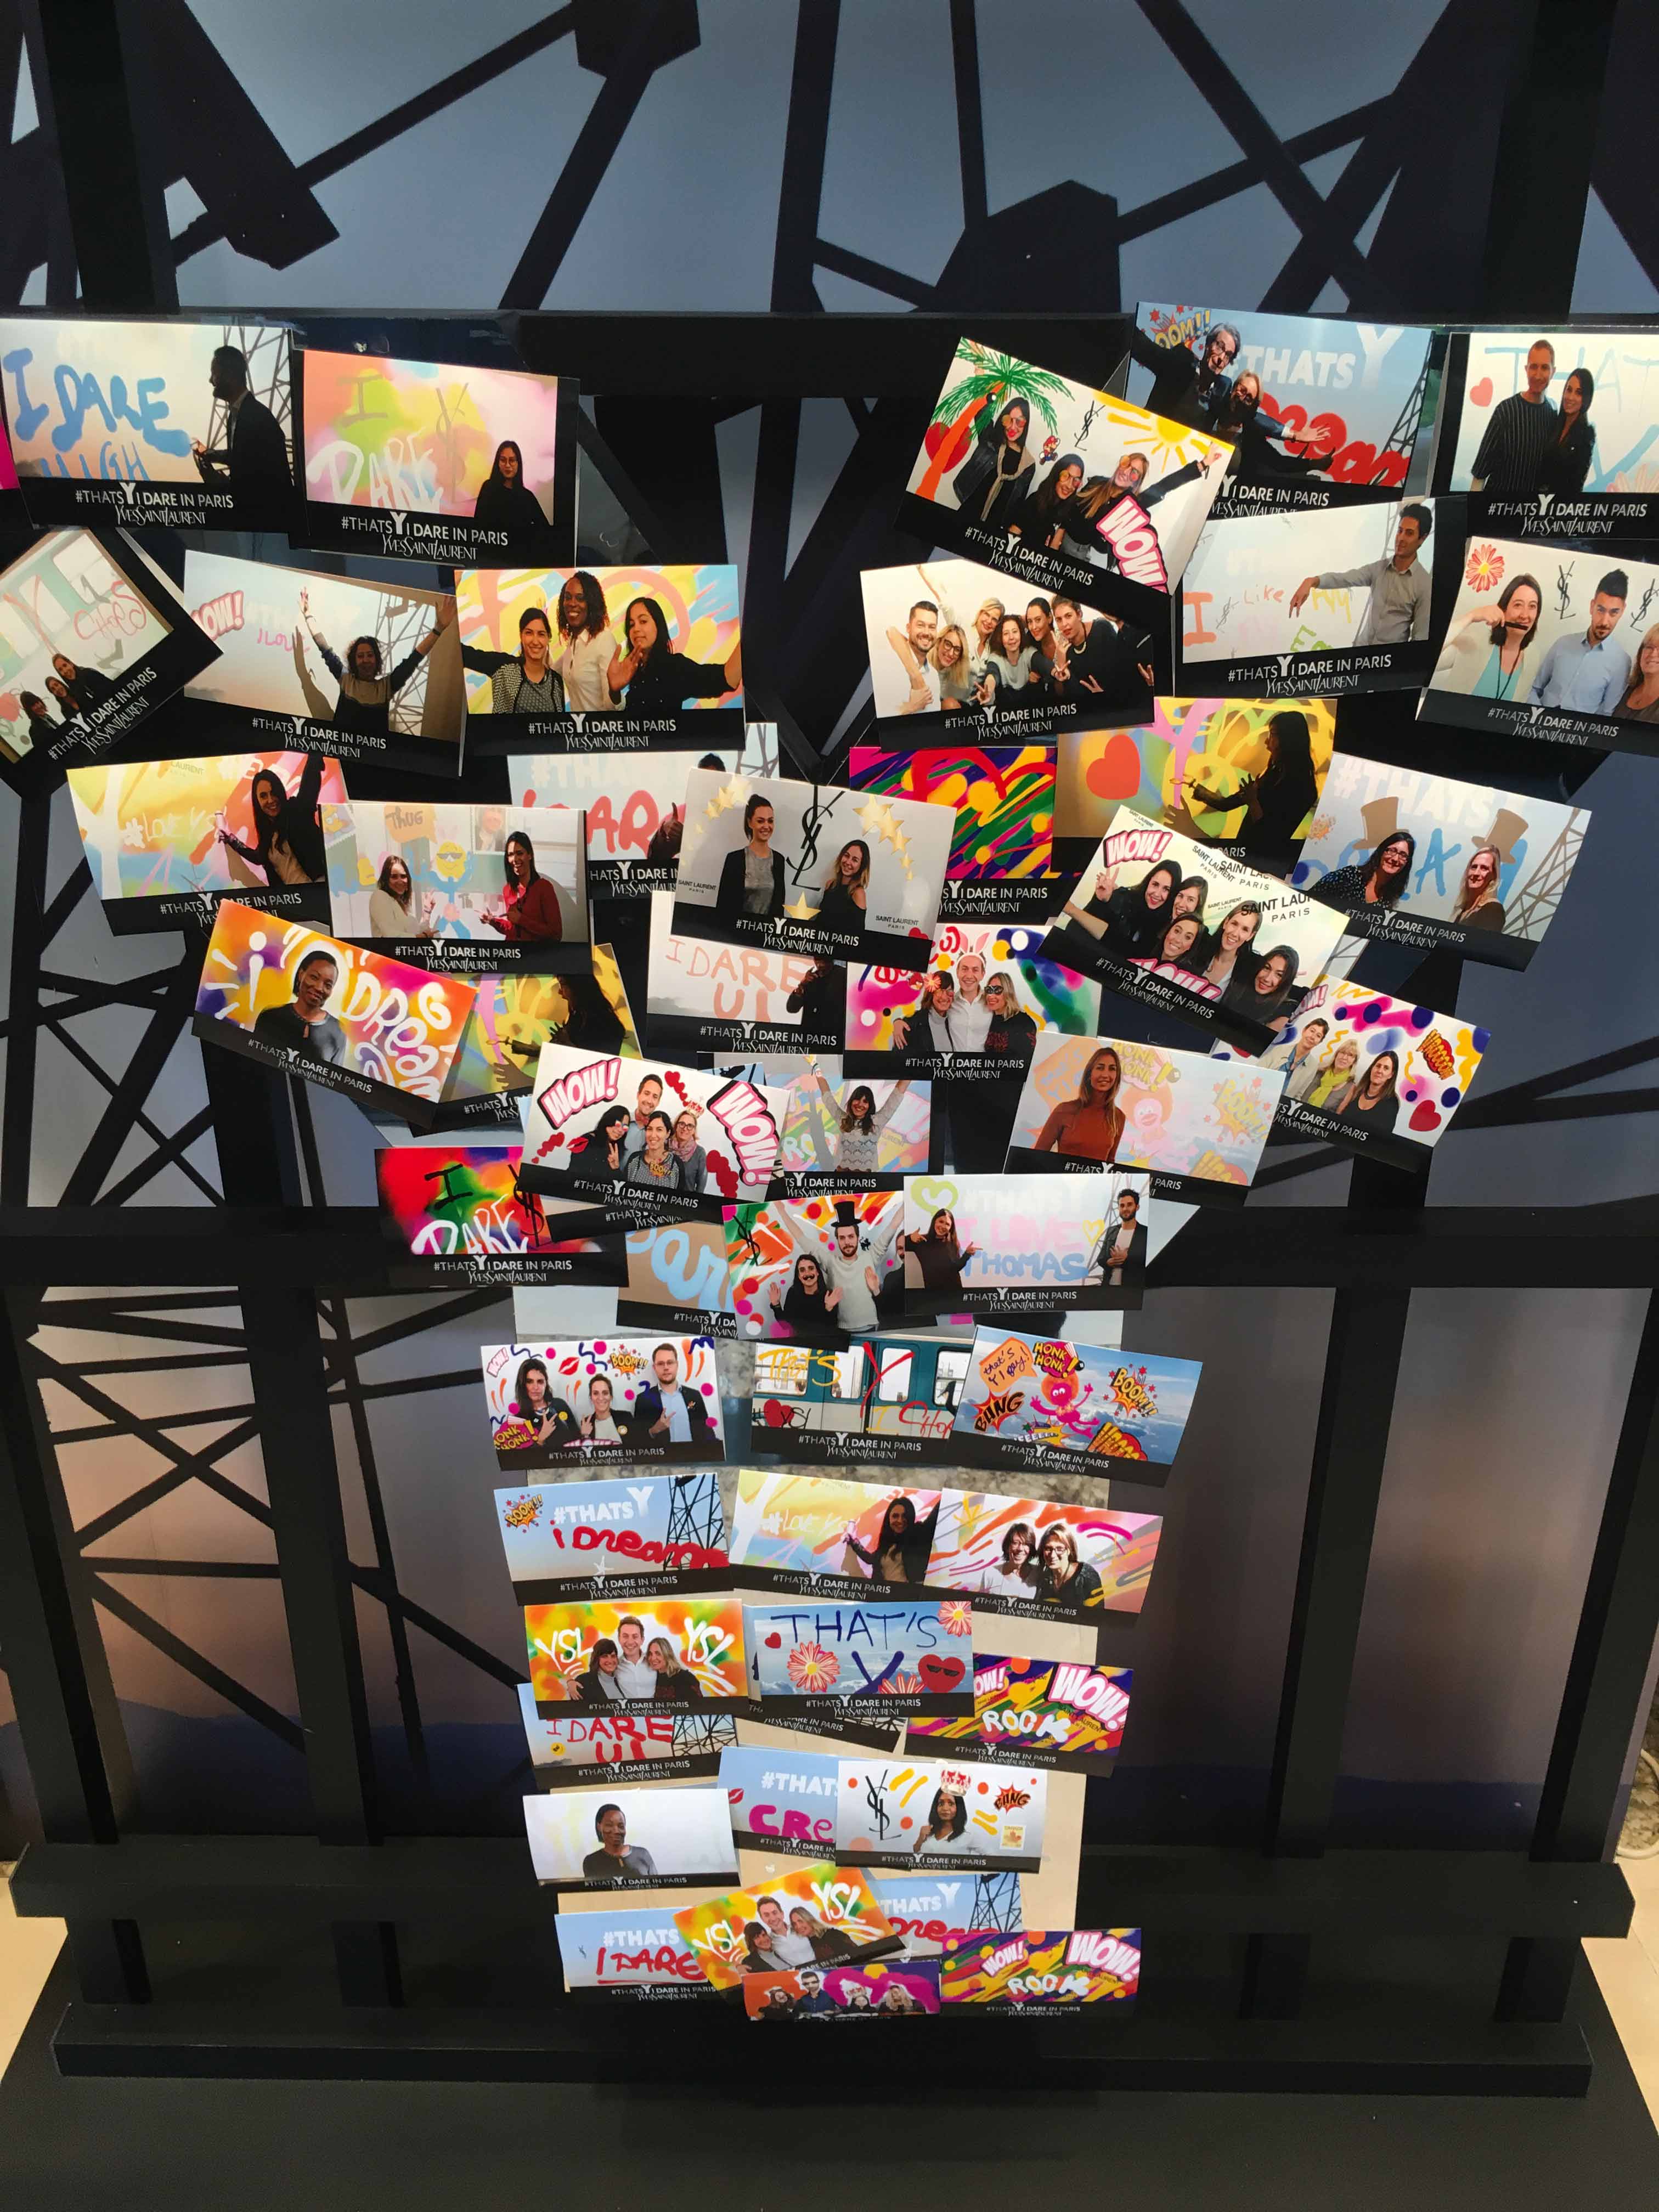 photobooth digital à Rueil-malmaison - Photocall graffiti pyramide souvenir de photos soirées entreprises